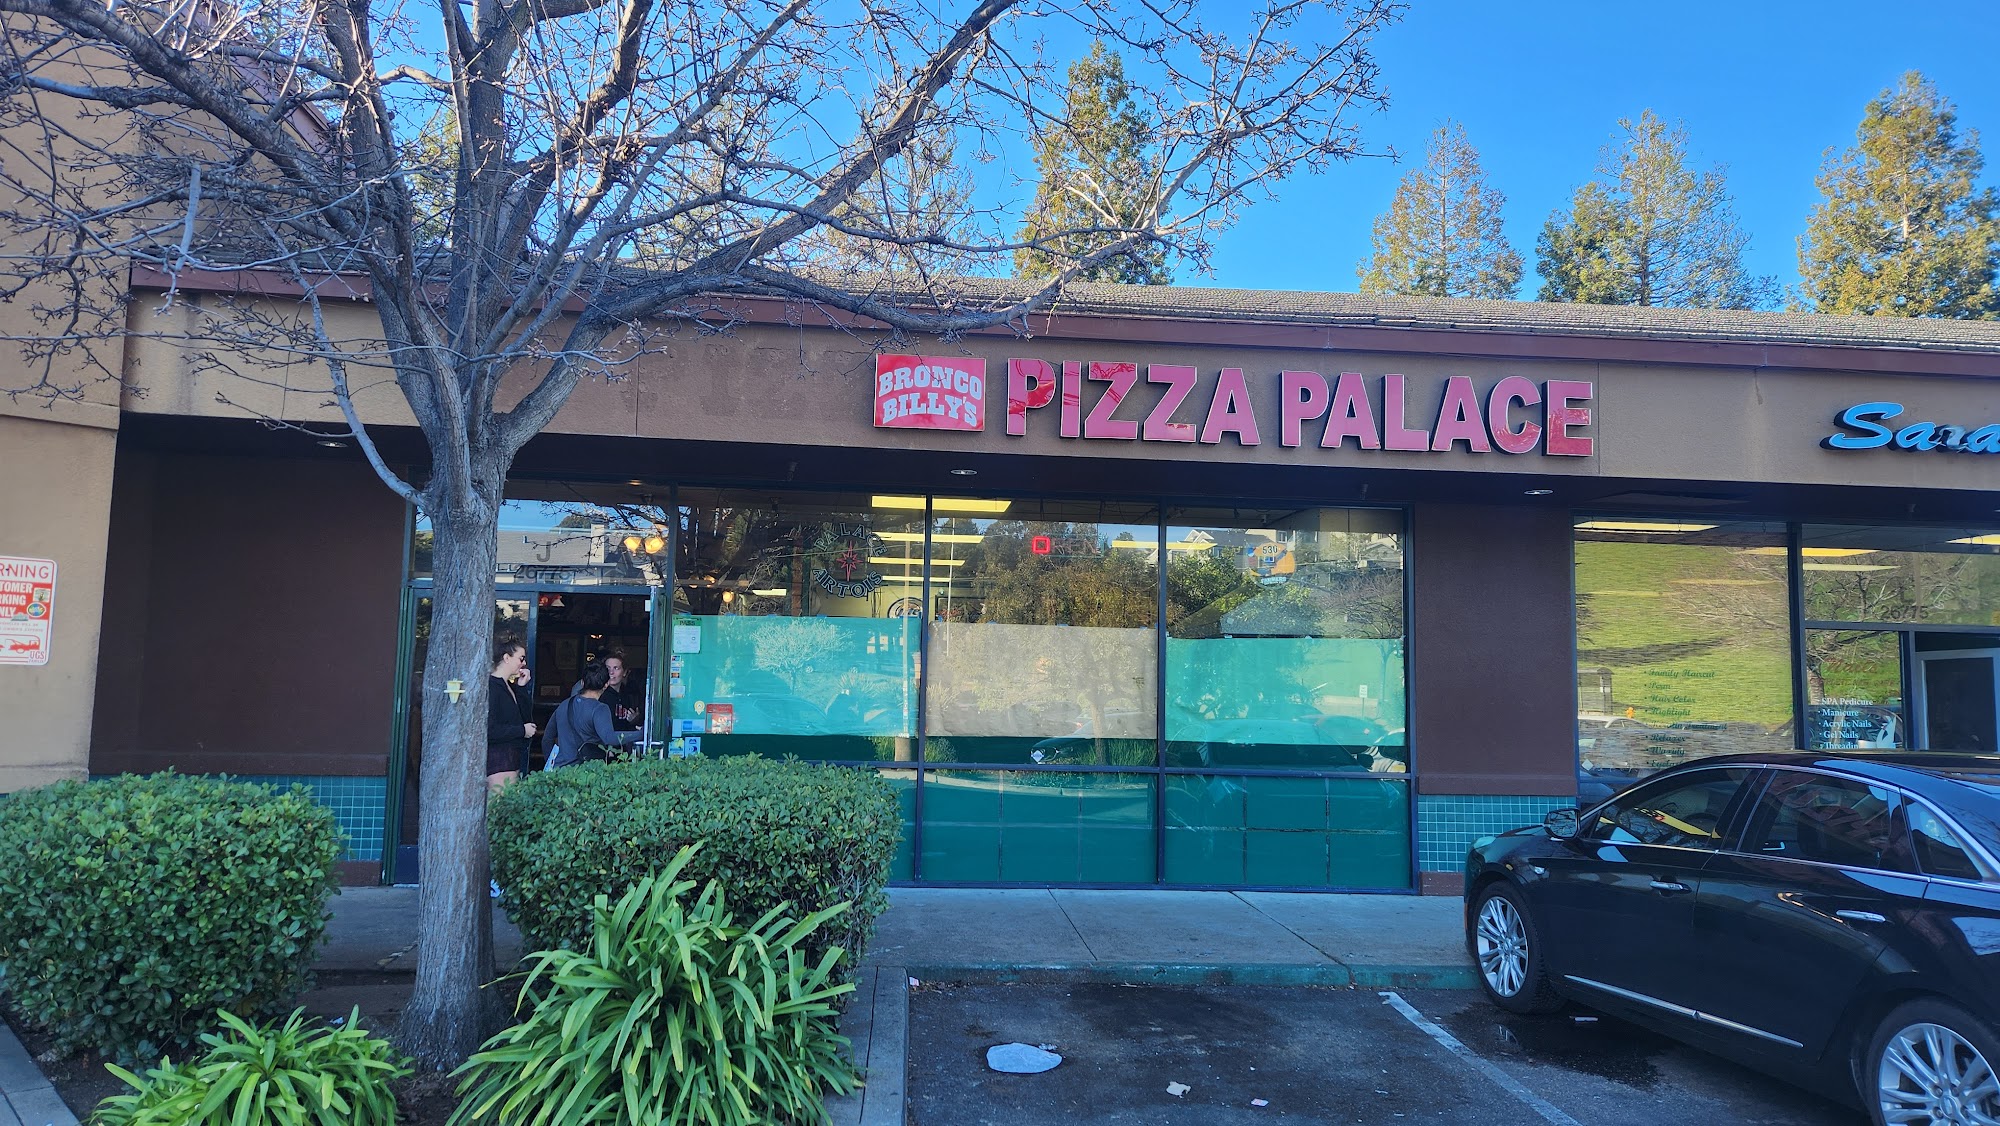 Bronco Billy's Pizza Palace